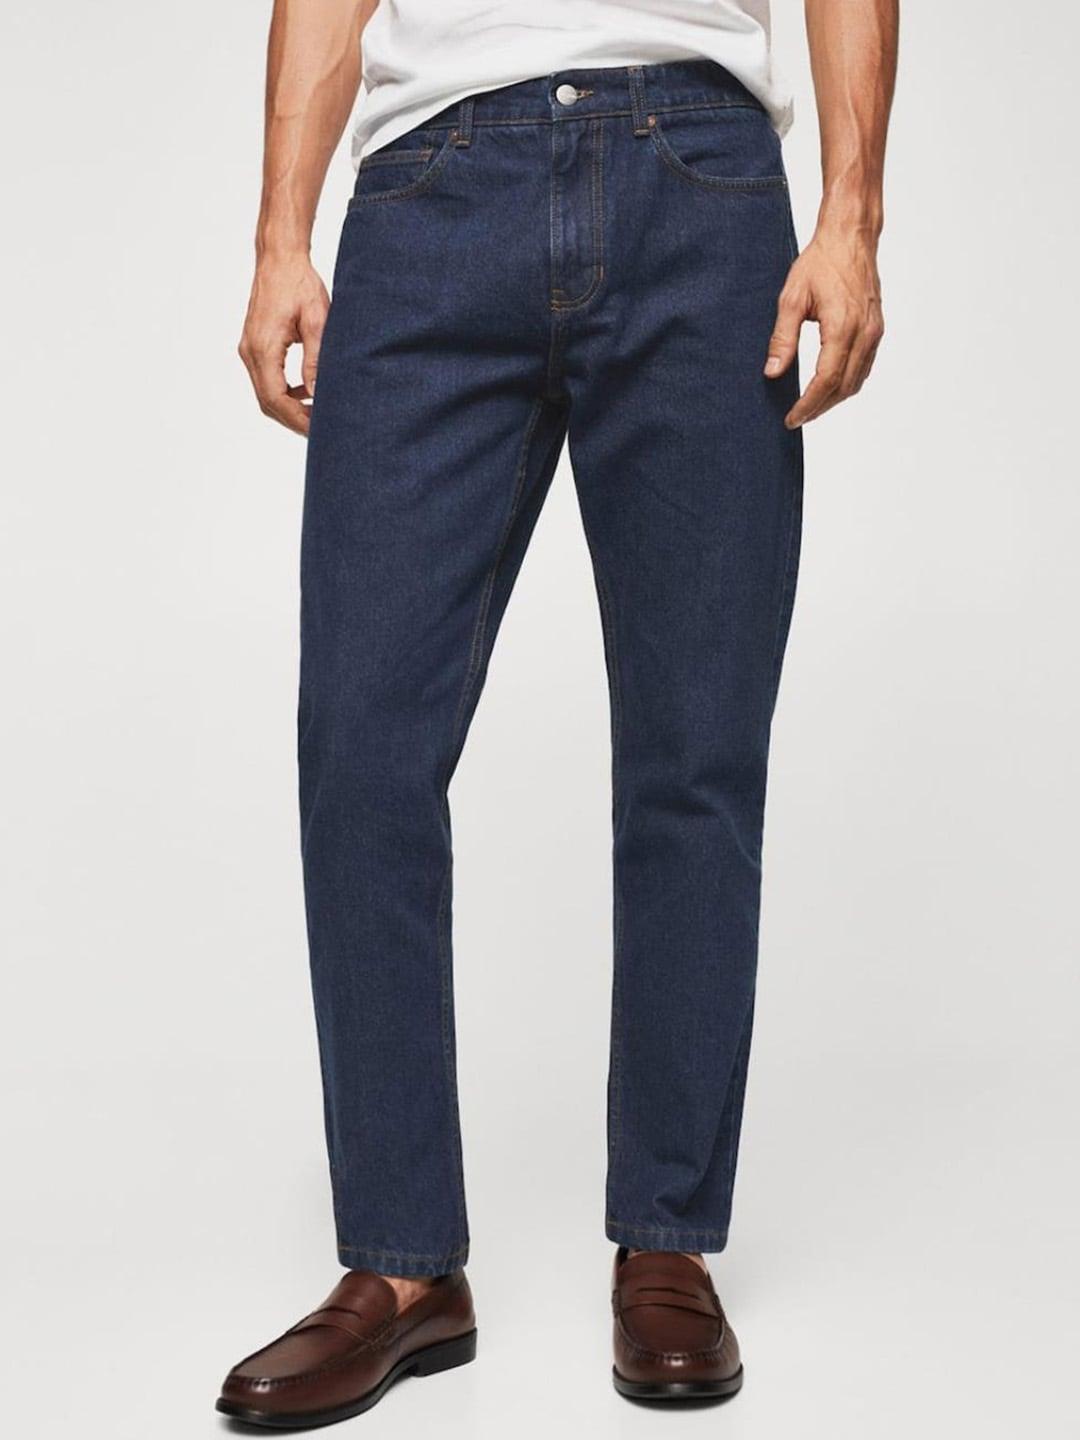 kotty-men-slim-fit-low-rise-clean-look-stretchable-cotton-jeans